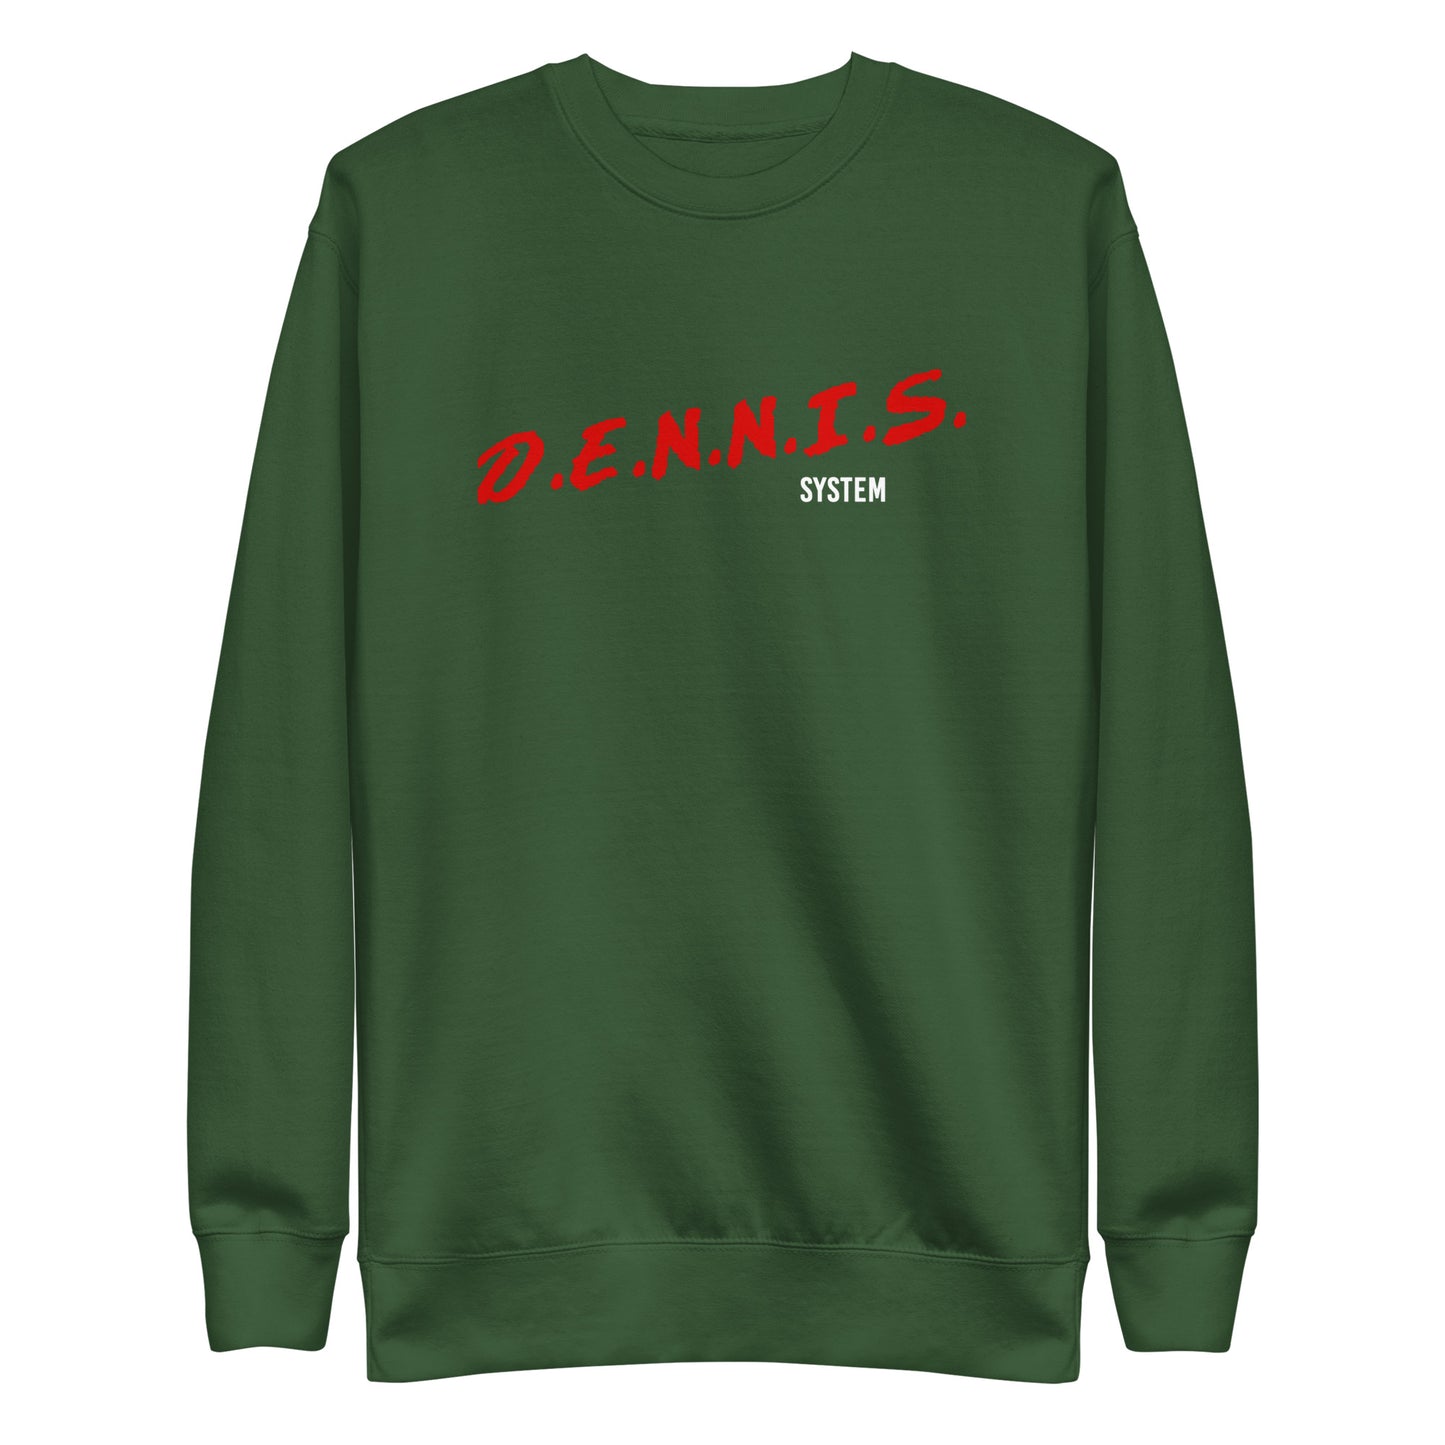 D.E.N.N.I.S. System Unisex Premium Sweatshirt